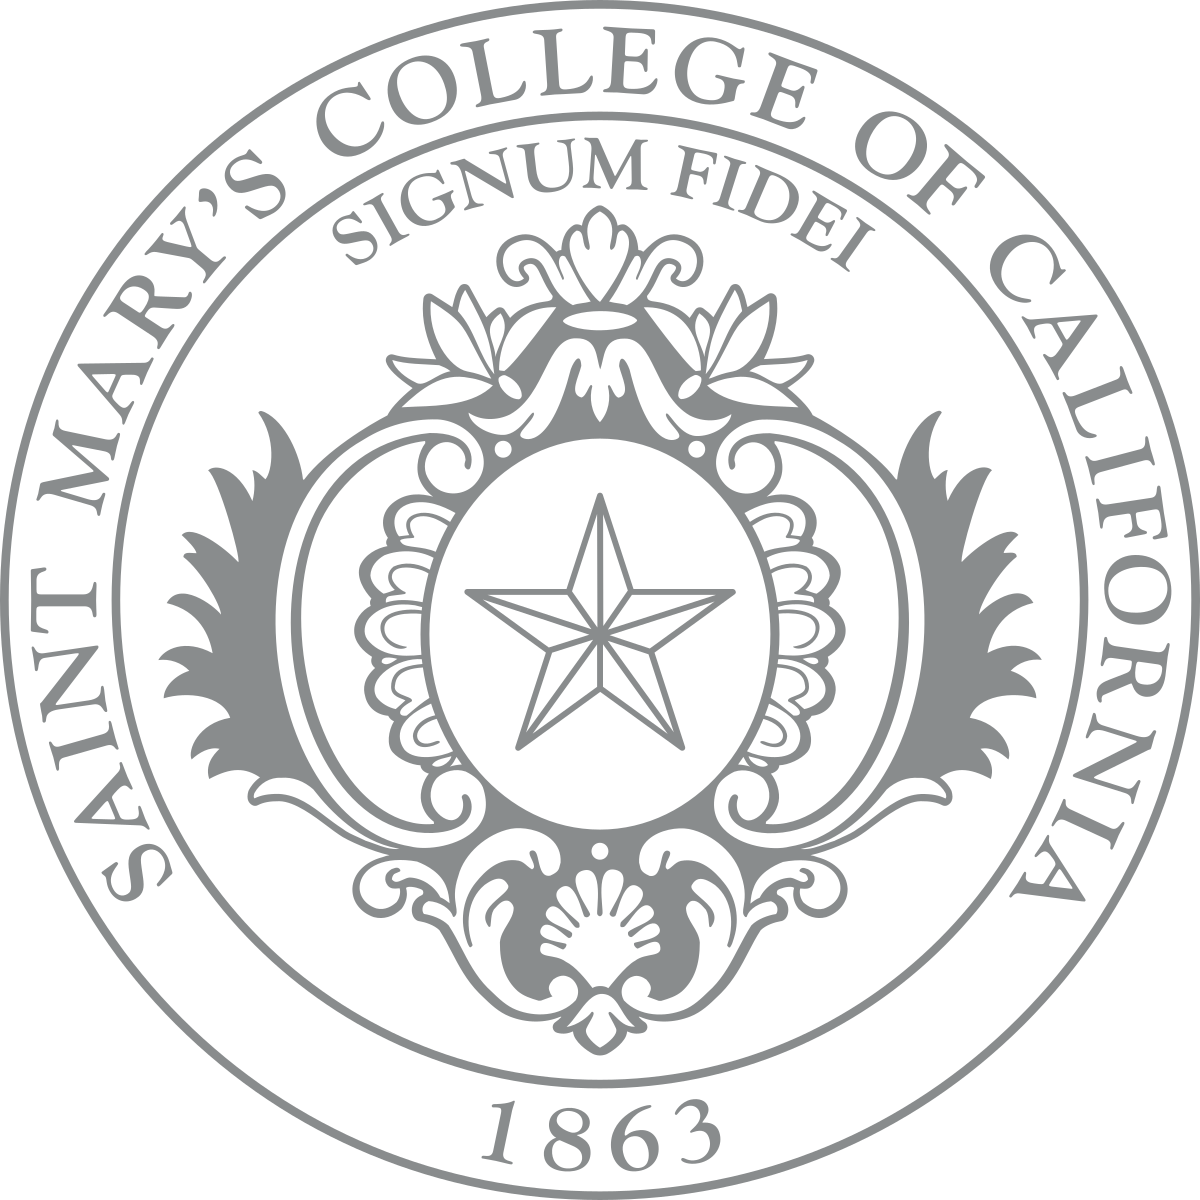 Saint Mary's Gaels Logo - Saint Mary's College of California